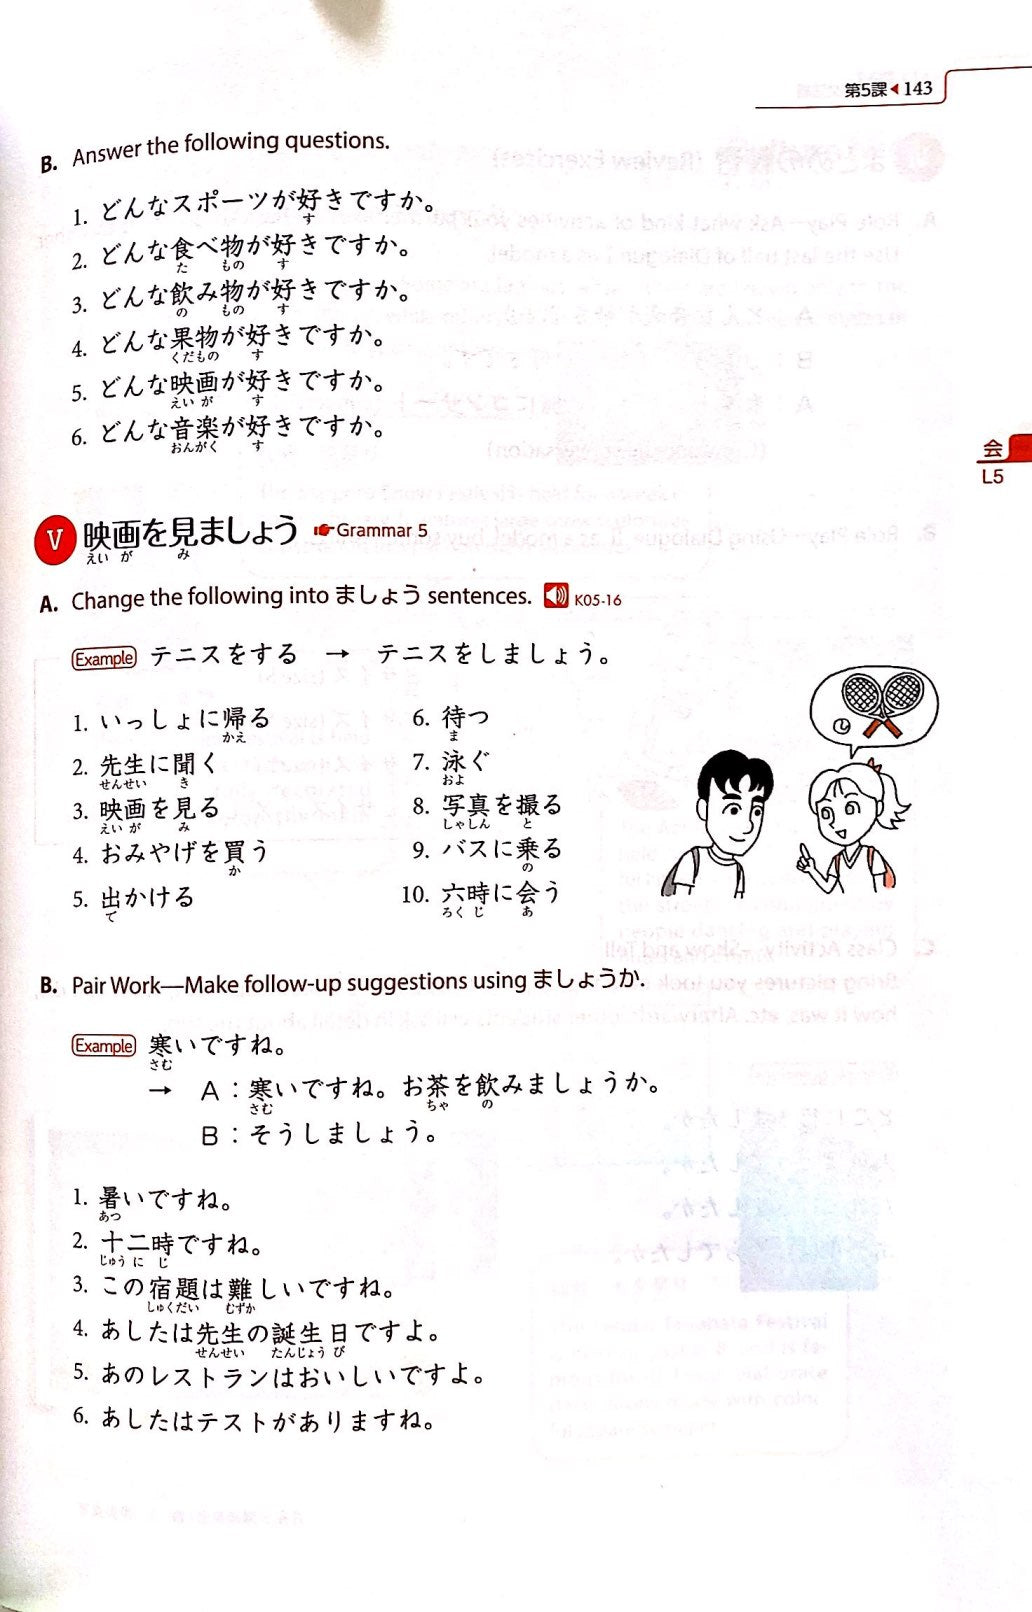 Learn Japanese textbook Genki